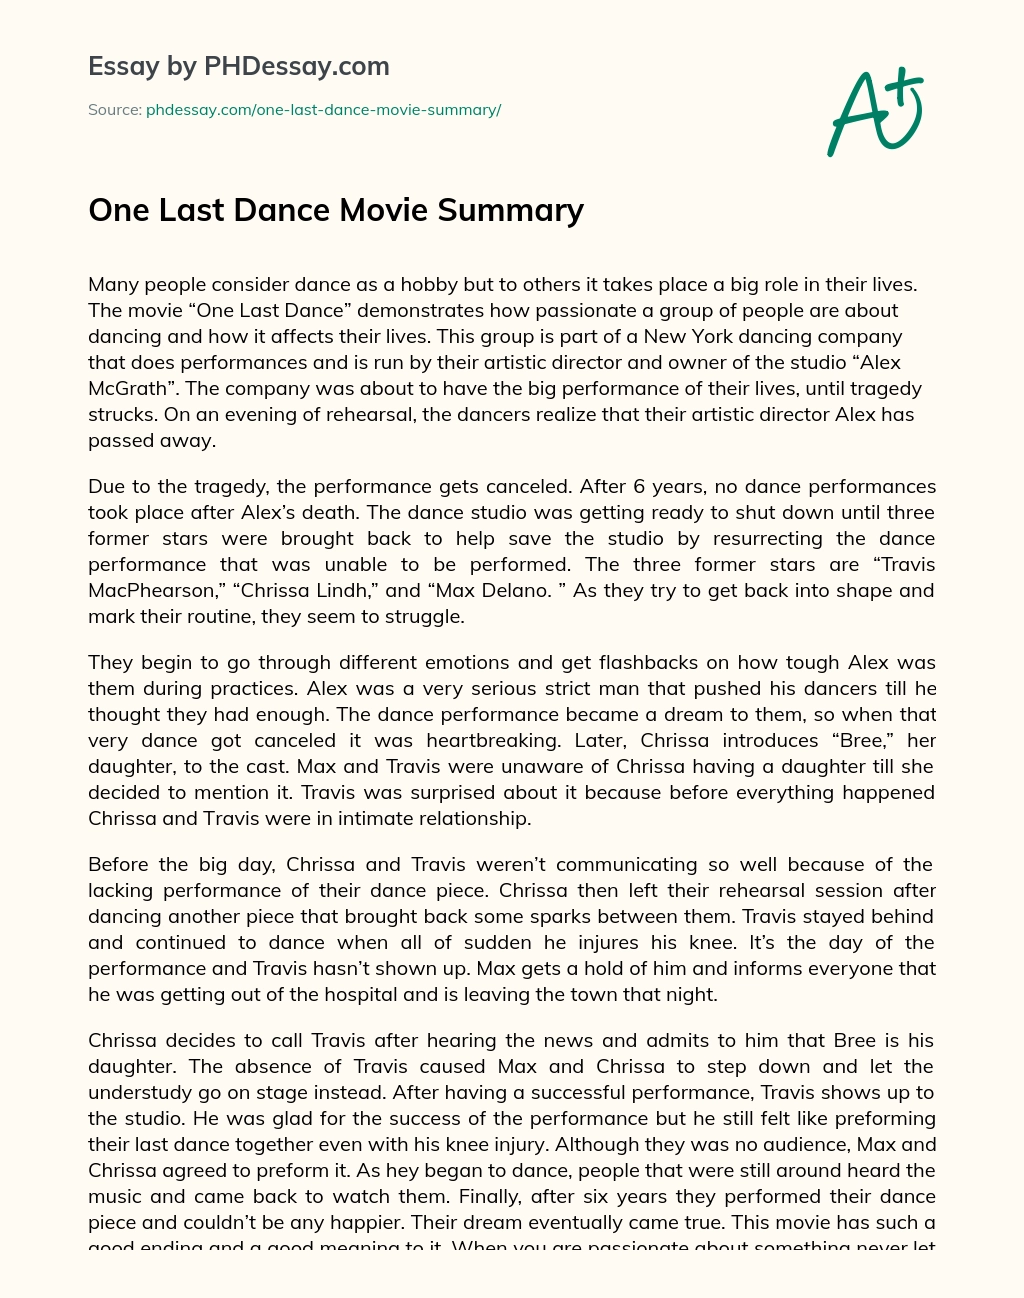 One Last Dance Movie Summary essay